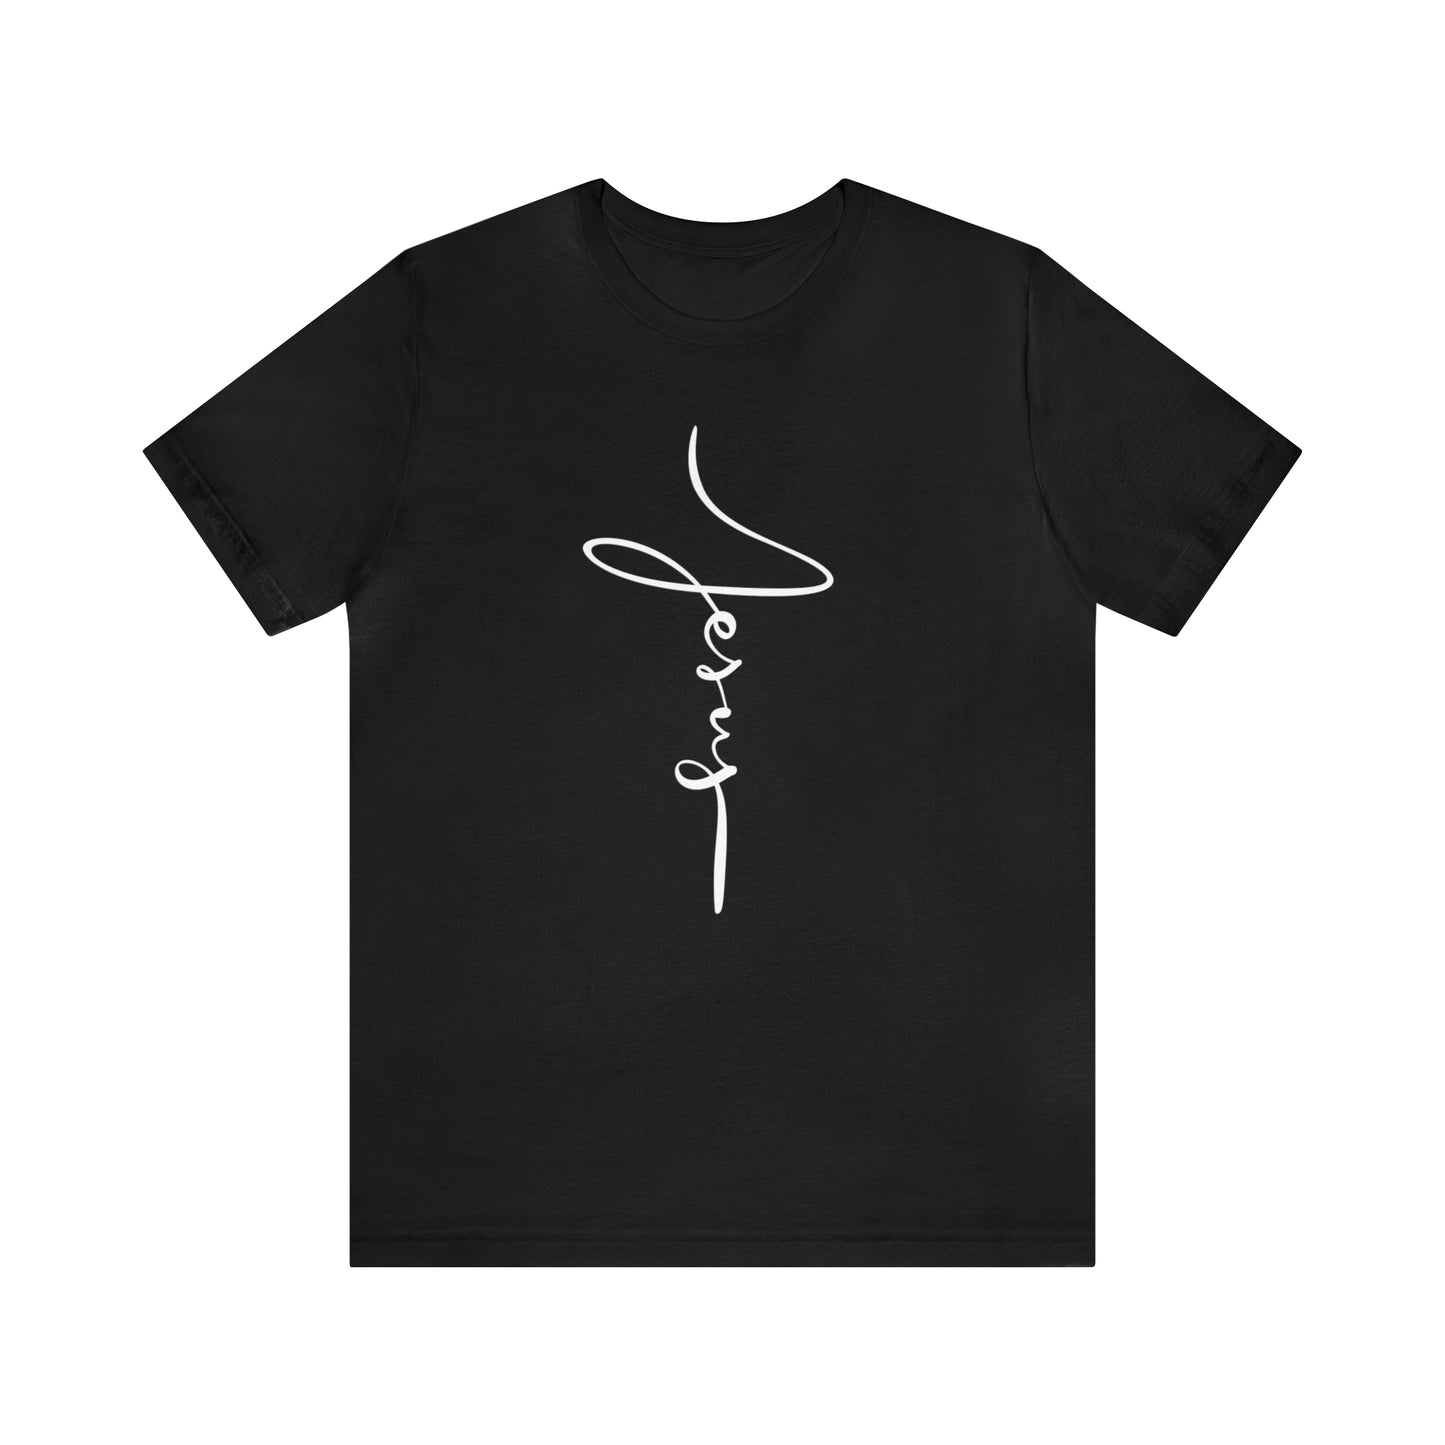 Jesus Cross Christian T-Shirt - Cursive White Font Neutral Color Tees Black mockup